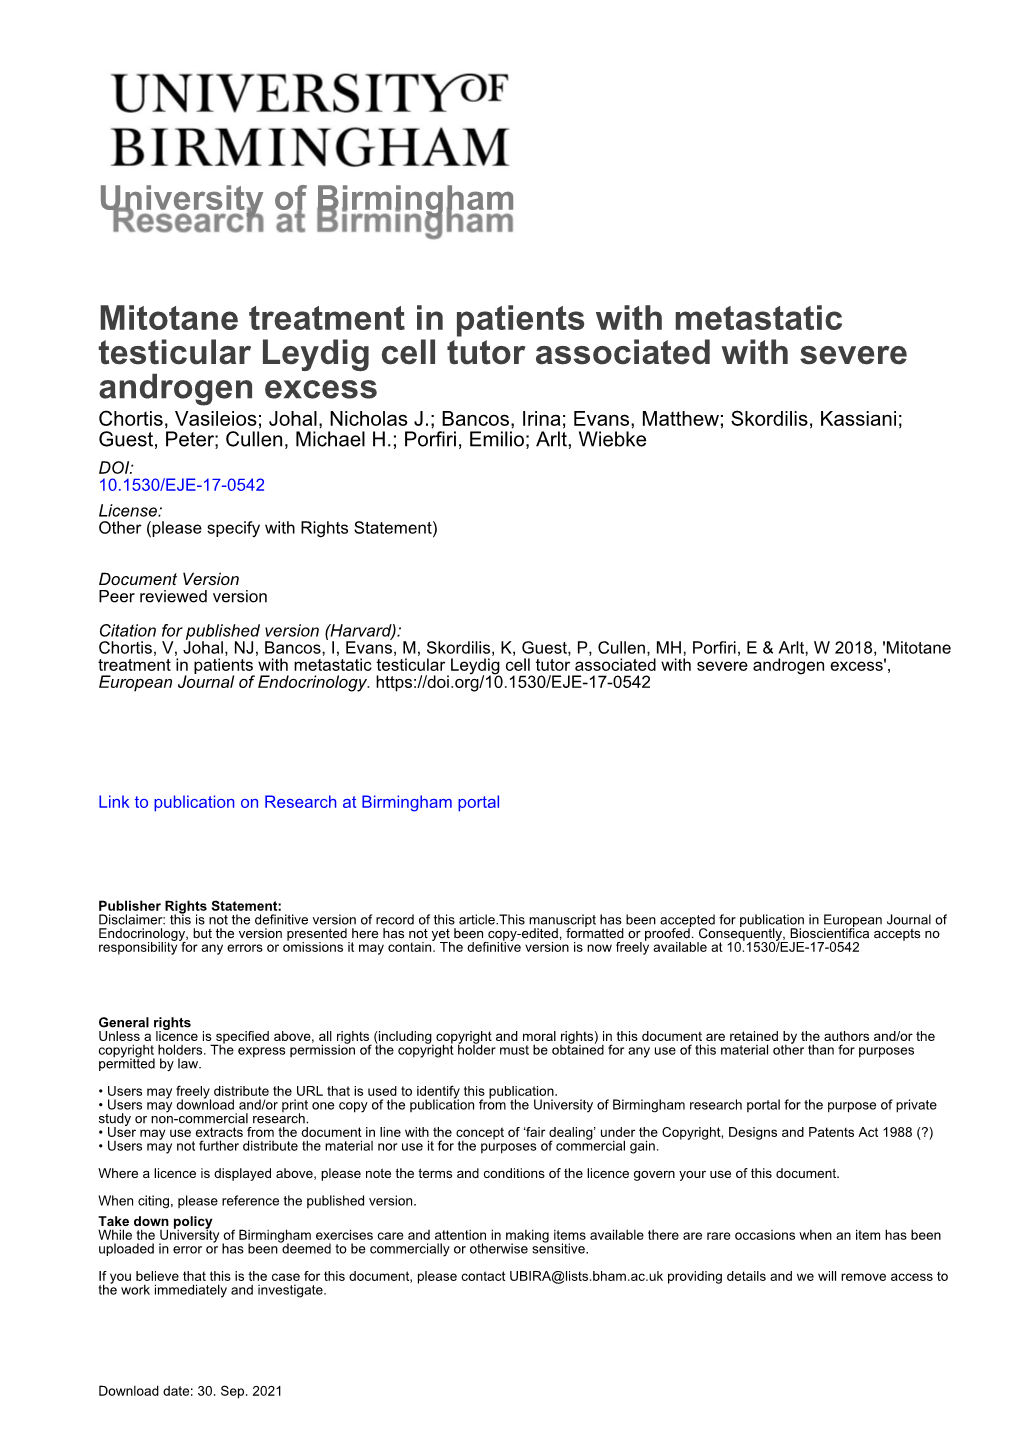 University of Birmingham Mitotane Treatment in Patients with Metastatic